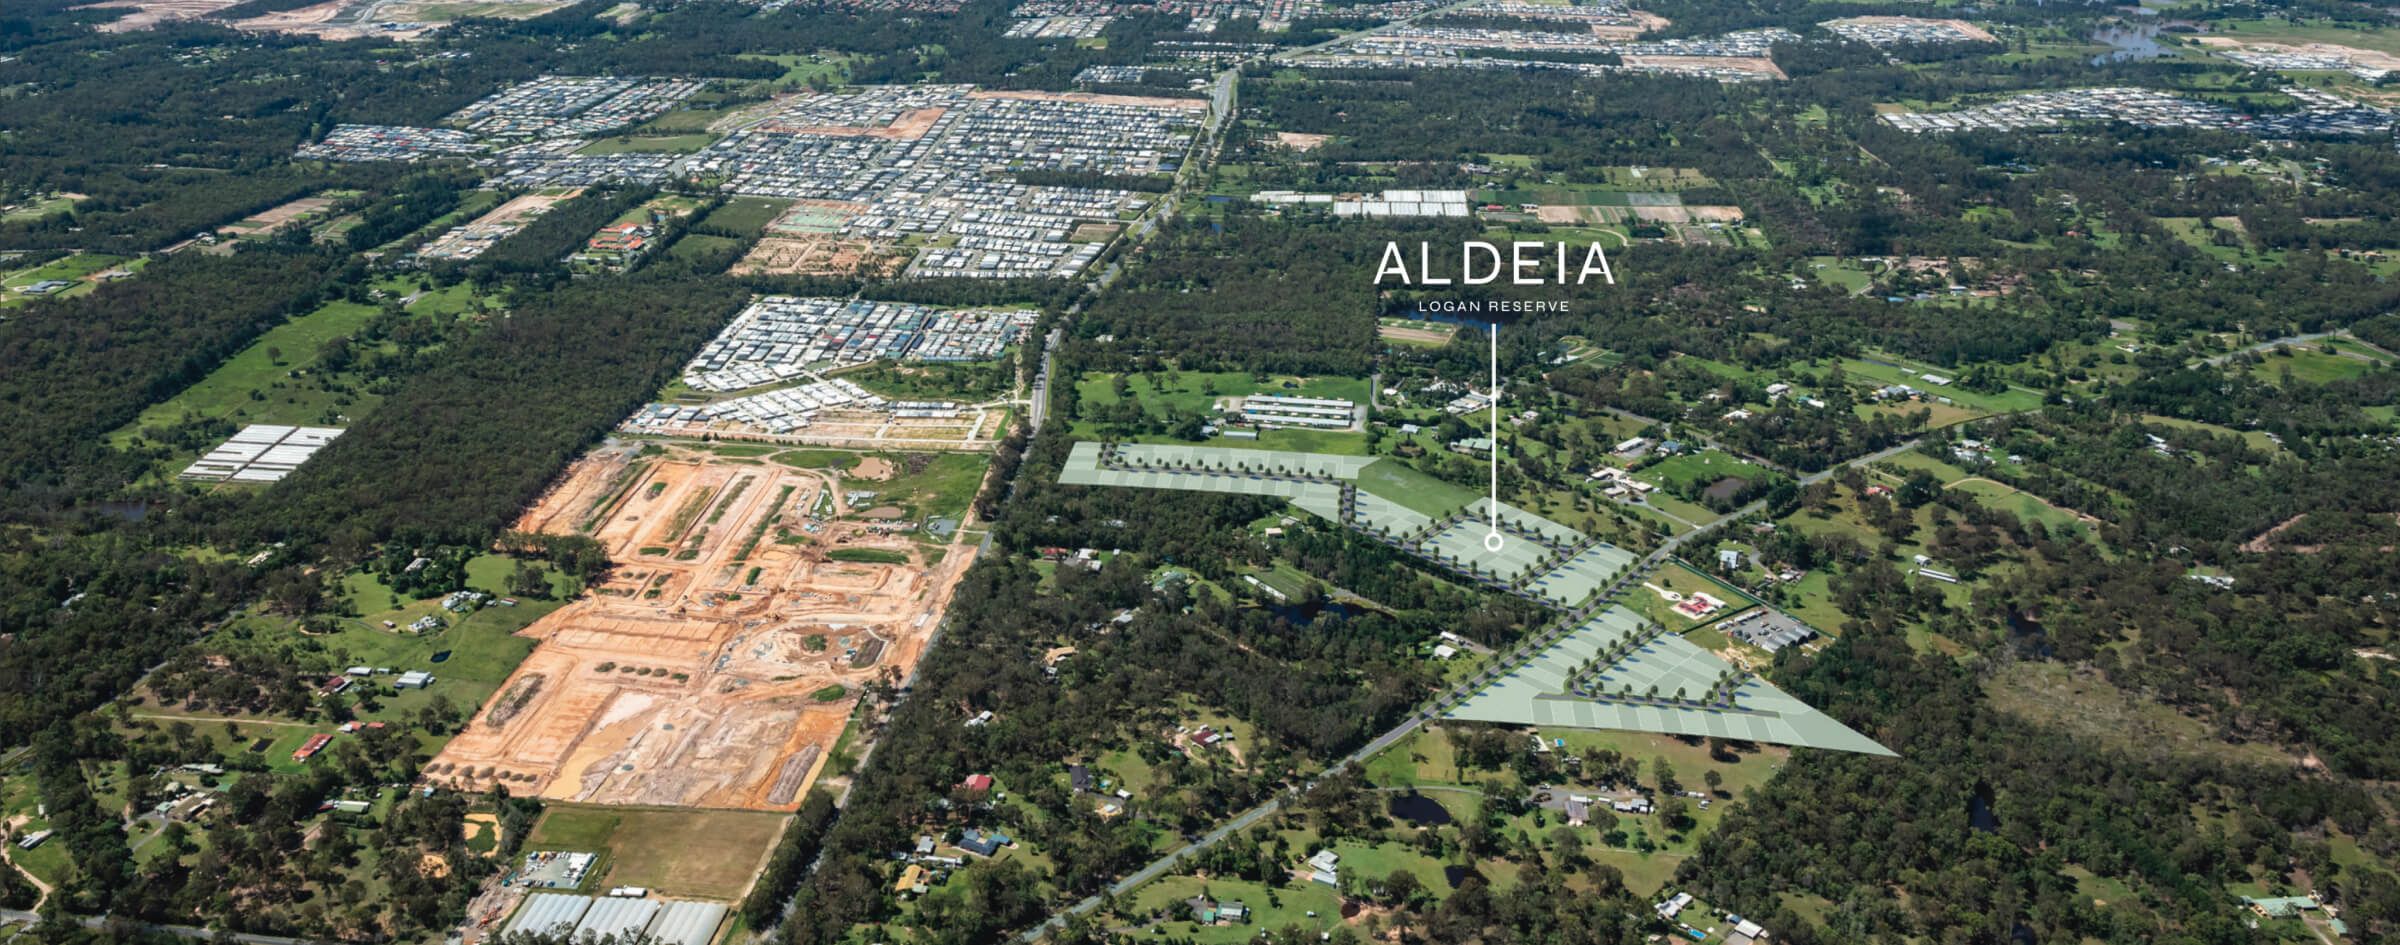 KDL Property Group unveils $42 million Aldeia housing estate in Logan Reserve